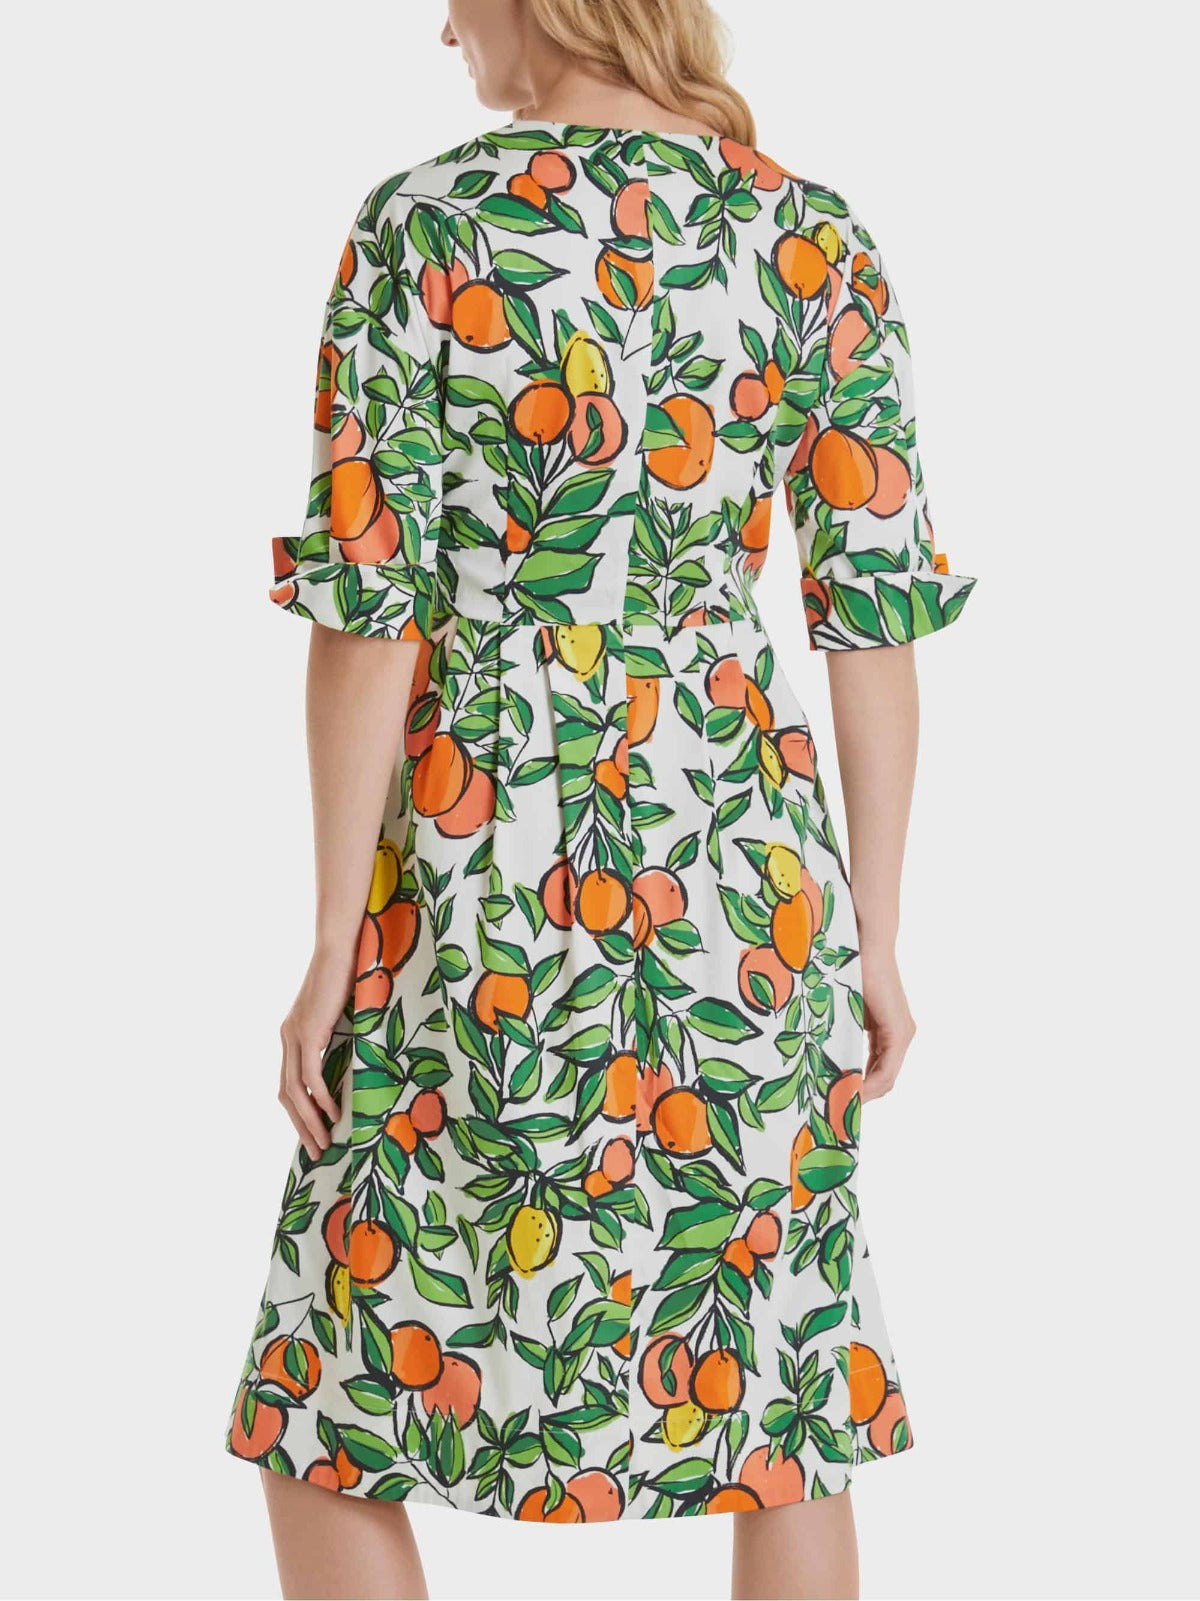 Citrus Fruit Print Dress